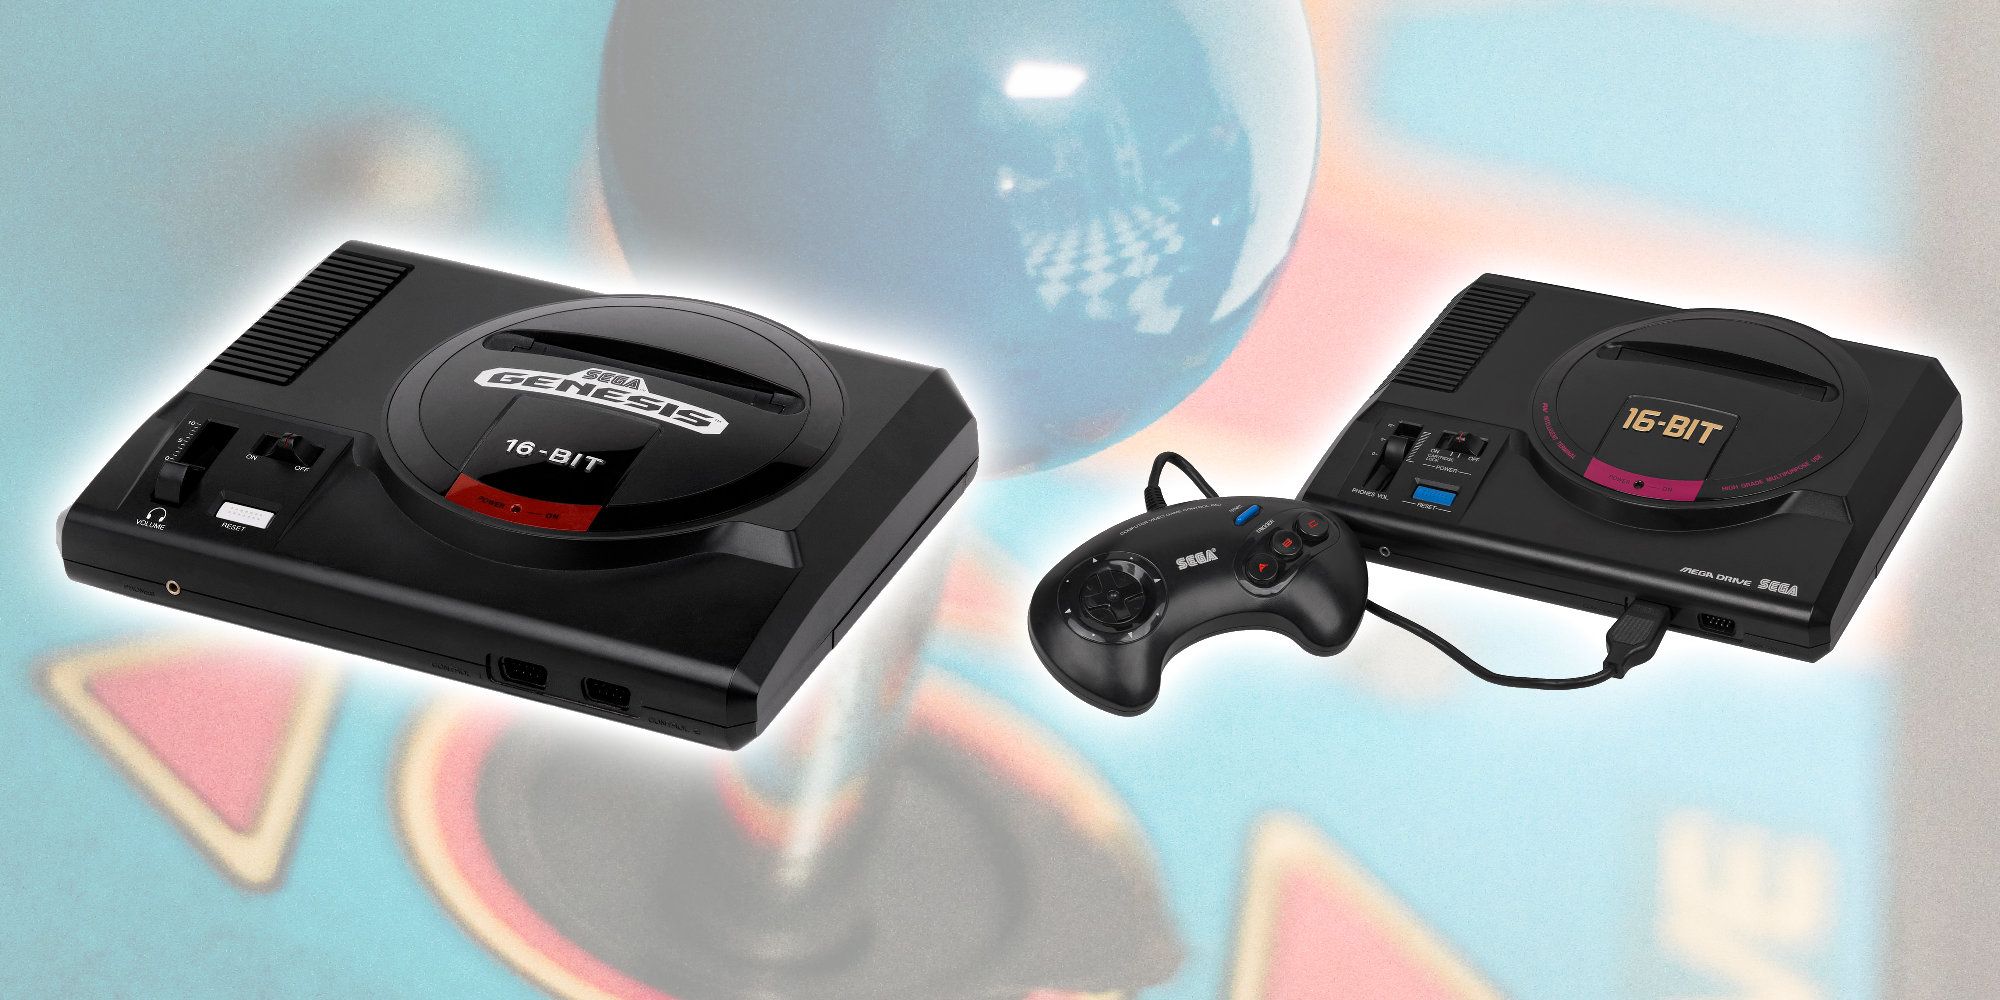 Pictures of Sega Genesis and Mega Drive consoles